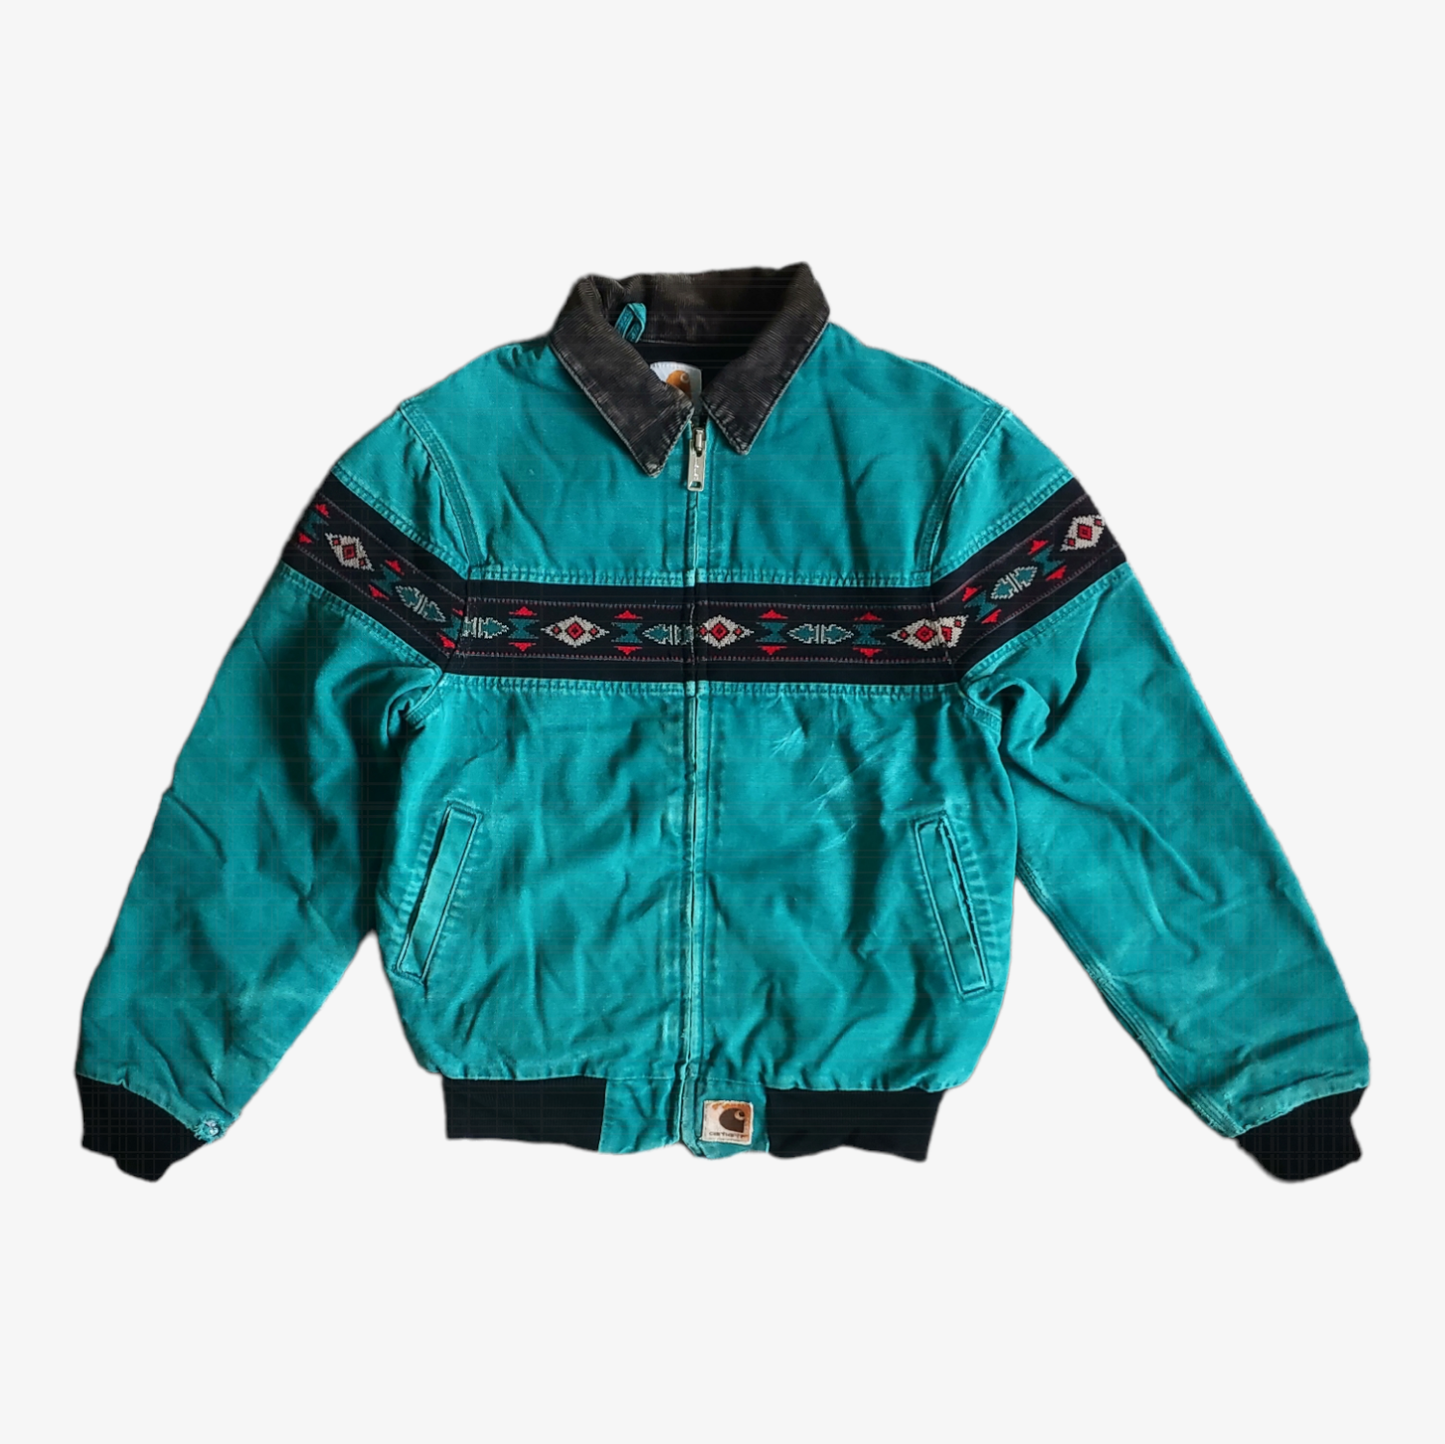 Vintage 90s Carhartt Aztec Navajo Patterned Turquoise Workwear Jacket - Casspios Dream